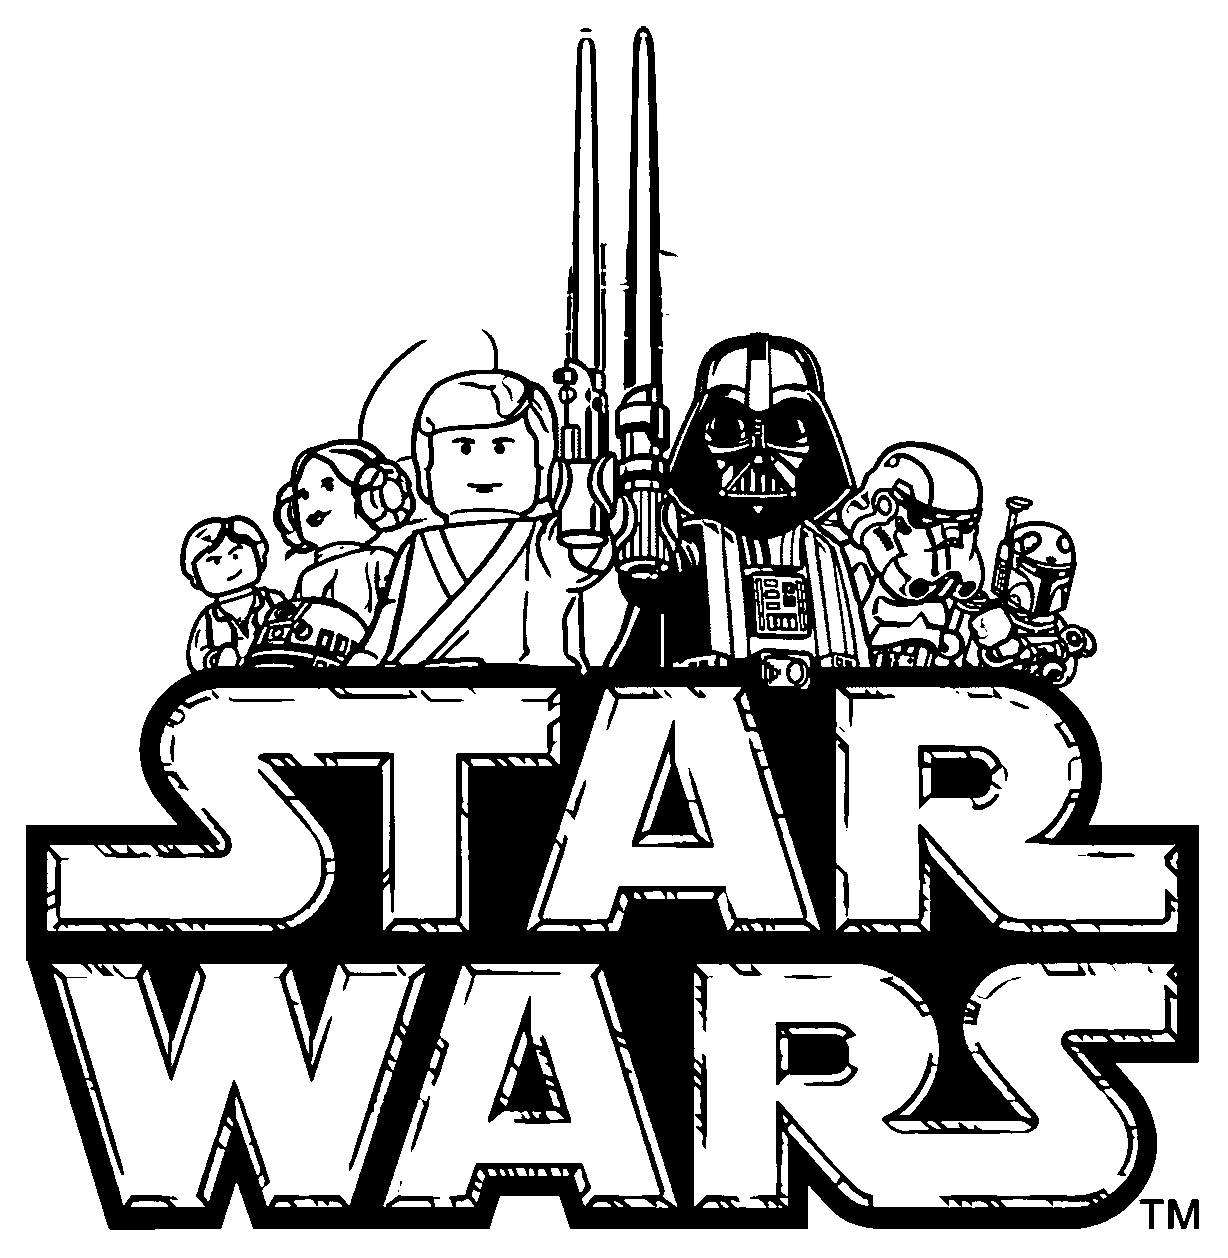 Lego Star Wars Logo Free Image Black White Coloring Page - Coloring